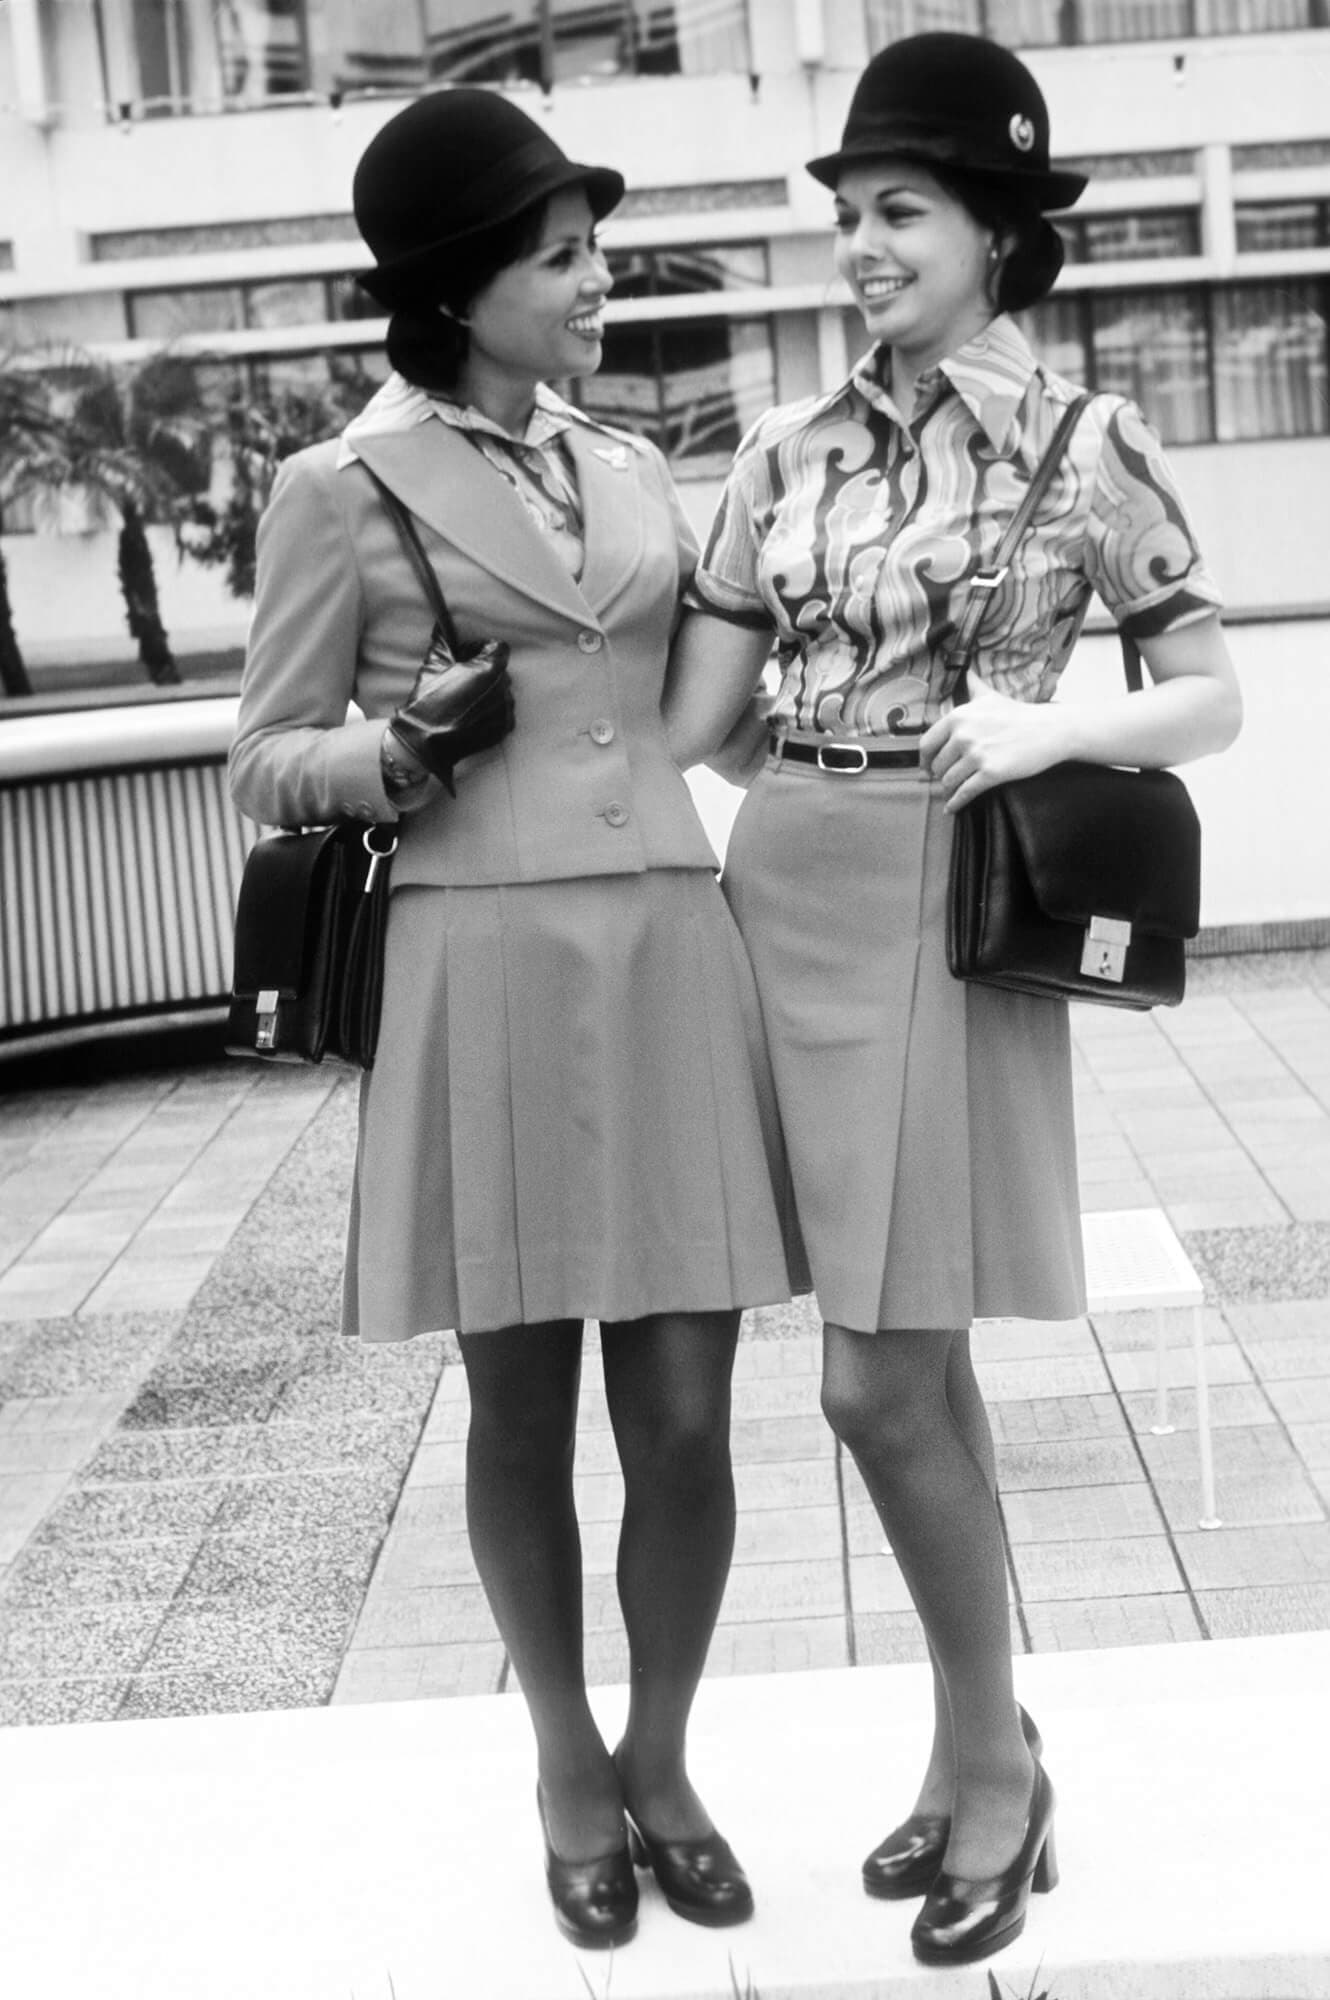 Two flight attendants posing in uniforms design by Teague